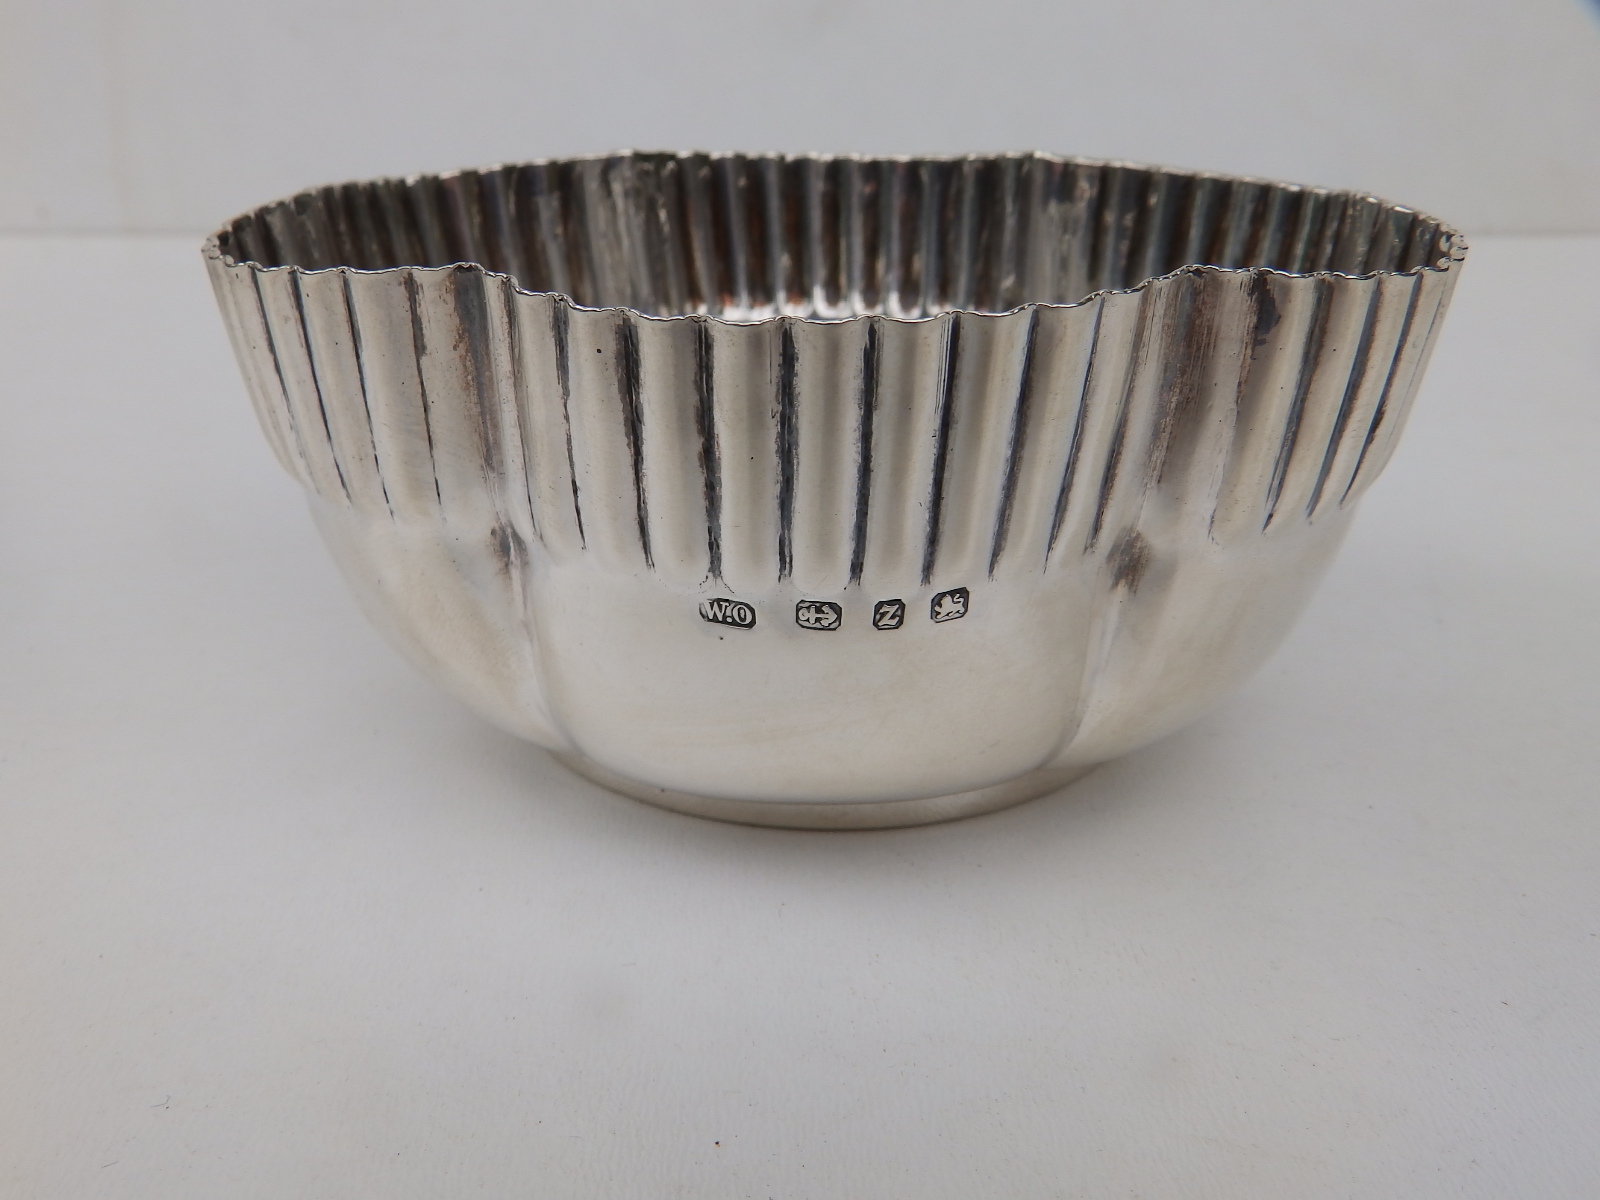 A fluted silver sugar bowl - WO, Birmingham 1899, 4.25" diameter. - Image 3 of 3